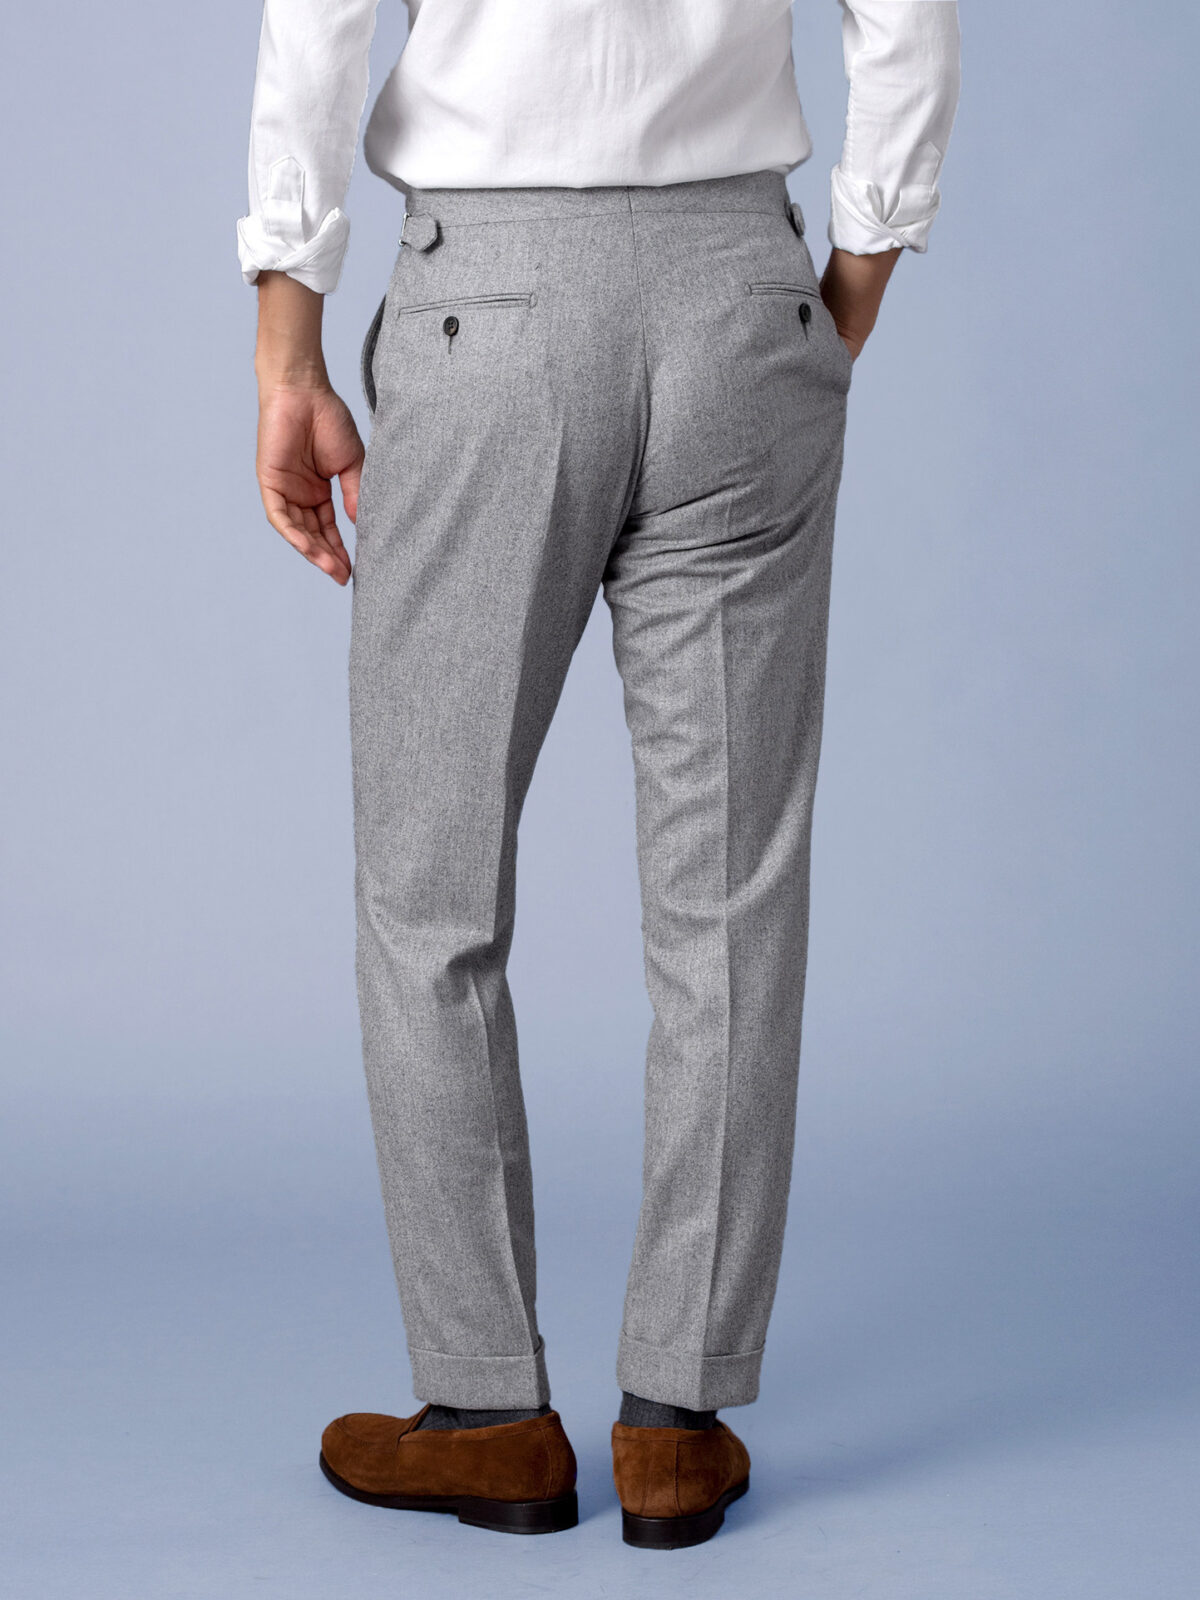 YUCENFU Men's Slim Fit 4-Way Stretch Pant Flat Front Flex Comfy Mens  Business Casual Pants(Black,32W×30L) at Amazon Men's Clothing store